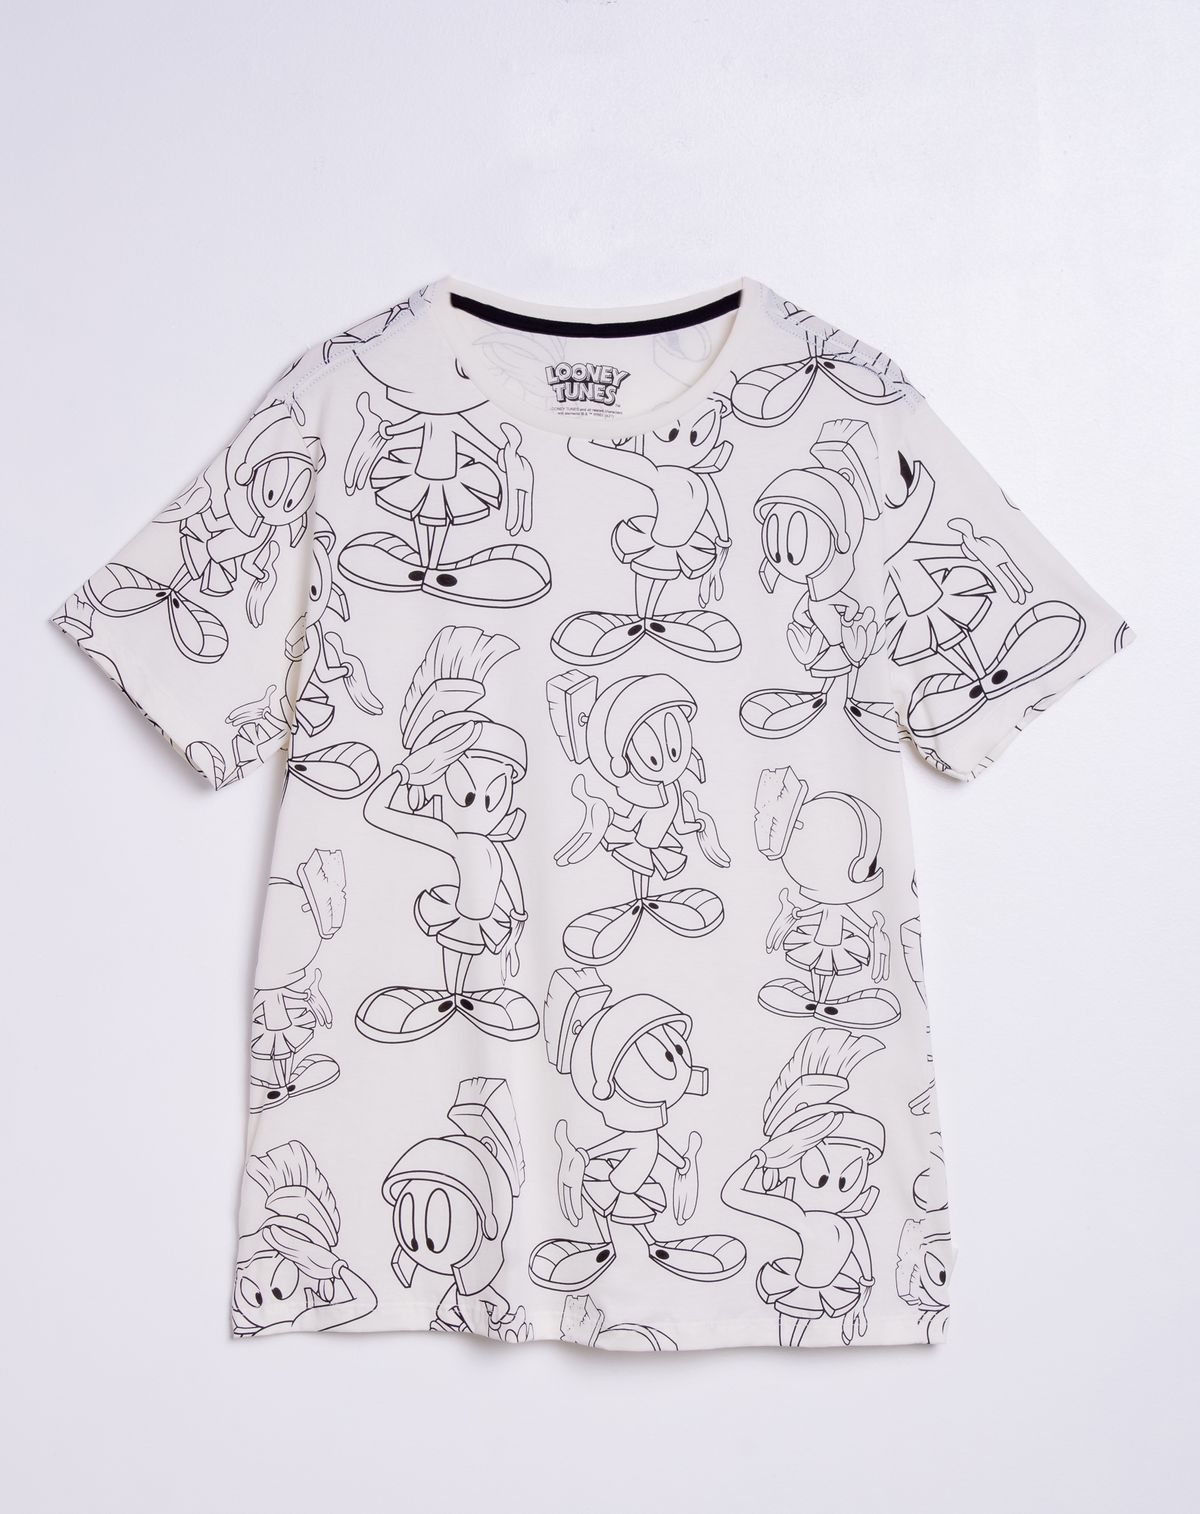 601661002-camiseta-manga-curta-masculina-marvin-looney-tunes-off-white-m-f2d